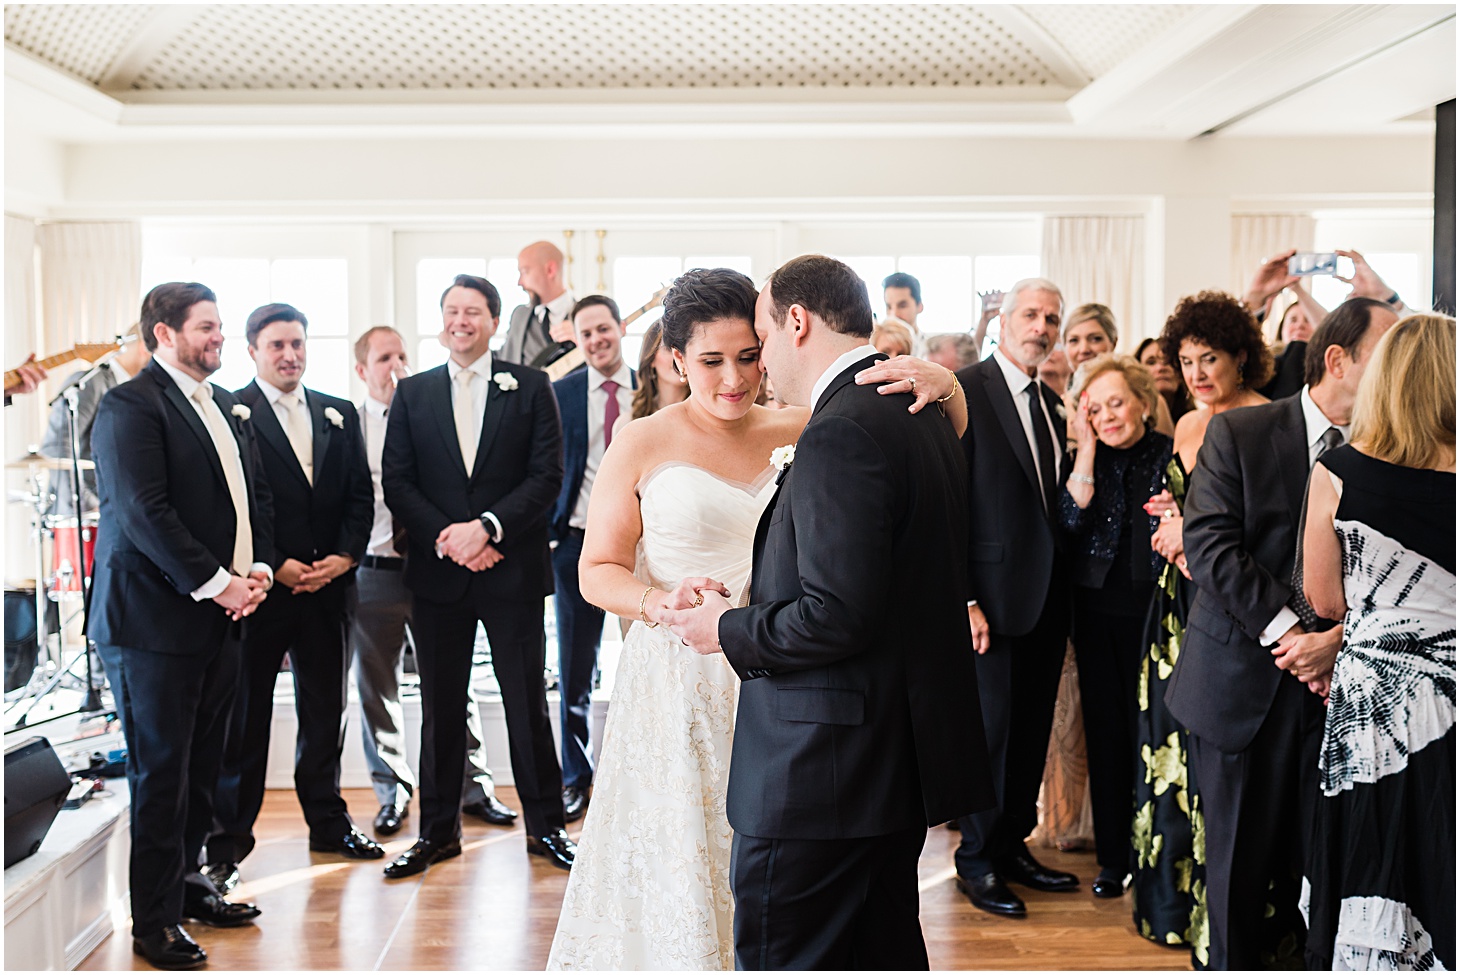 First Dance | Top Washington DC wedding photographer Sarah Bradshaw